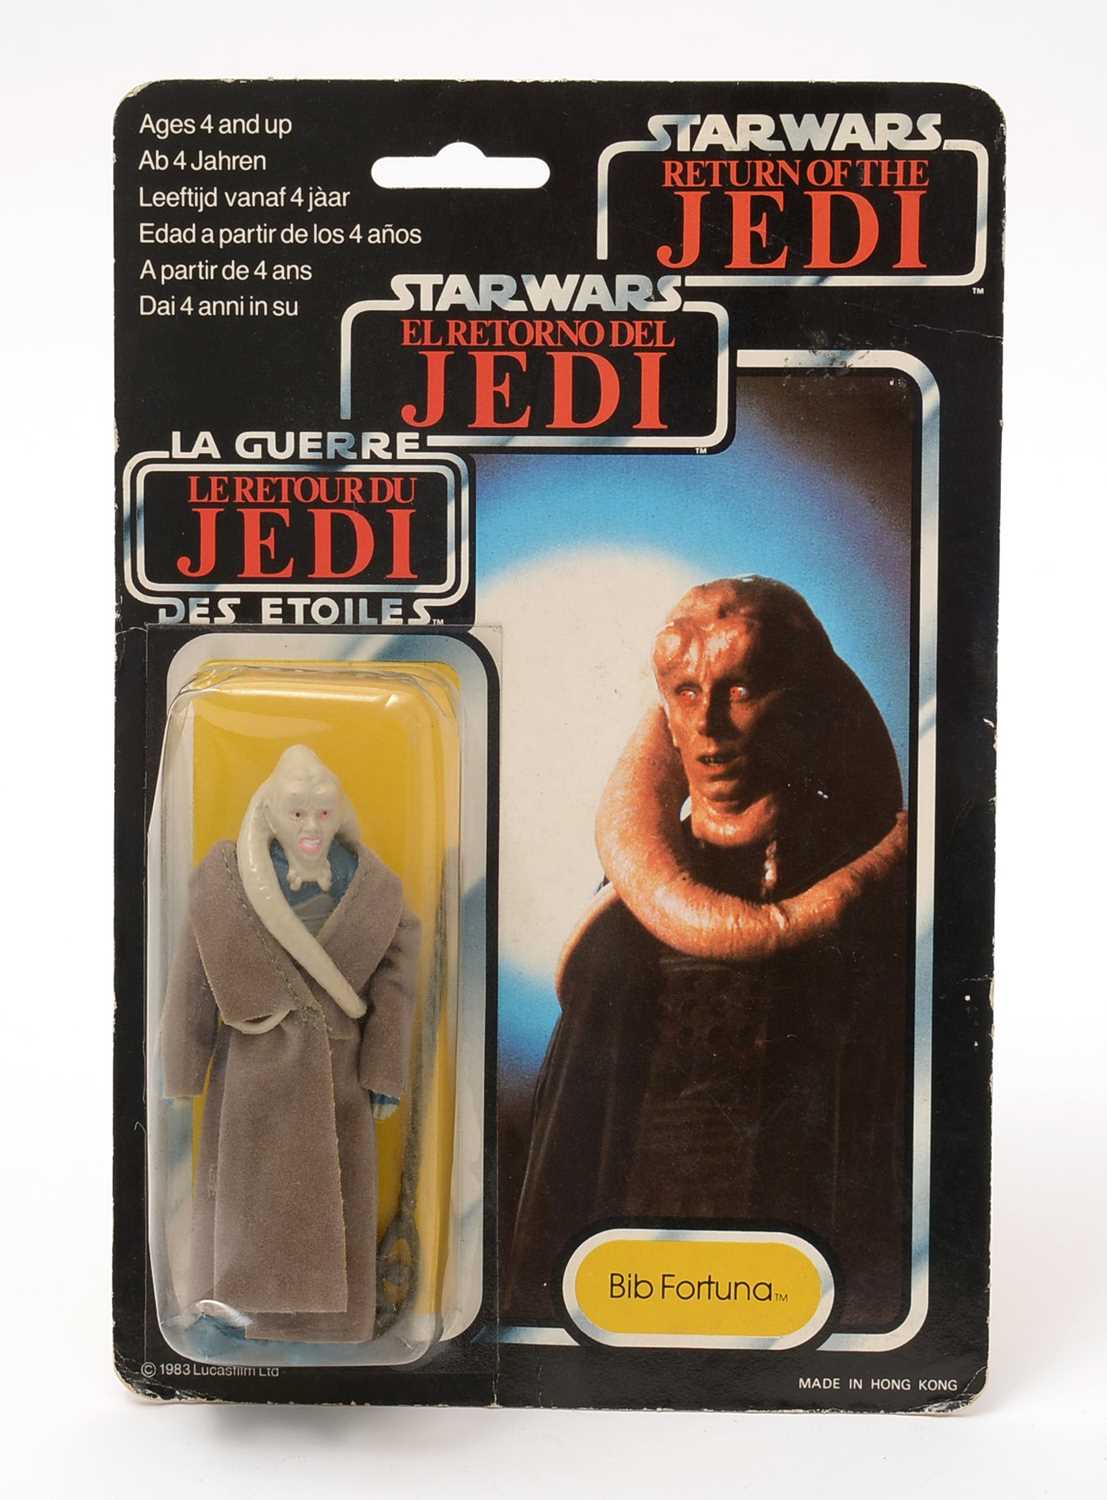 251 - Star Wars Return of the Jedi Bib Fortuna carded figure,